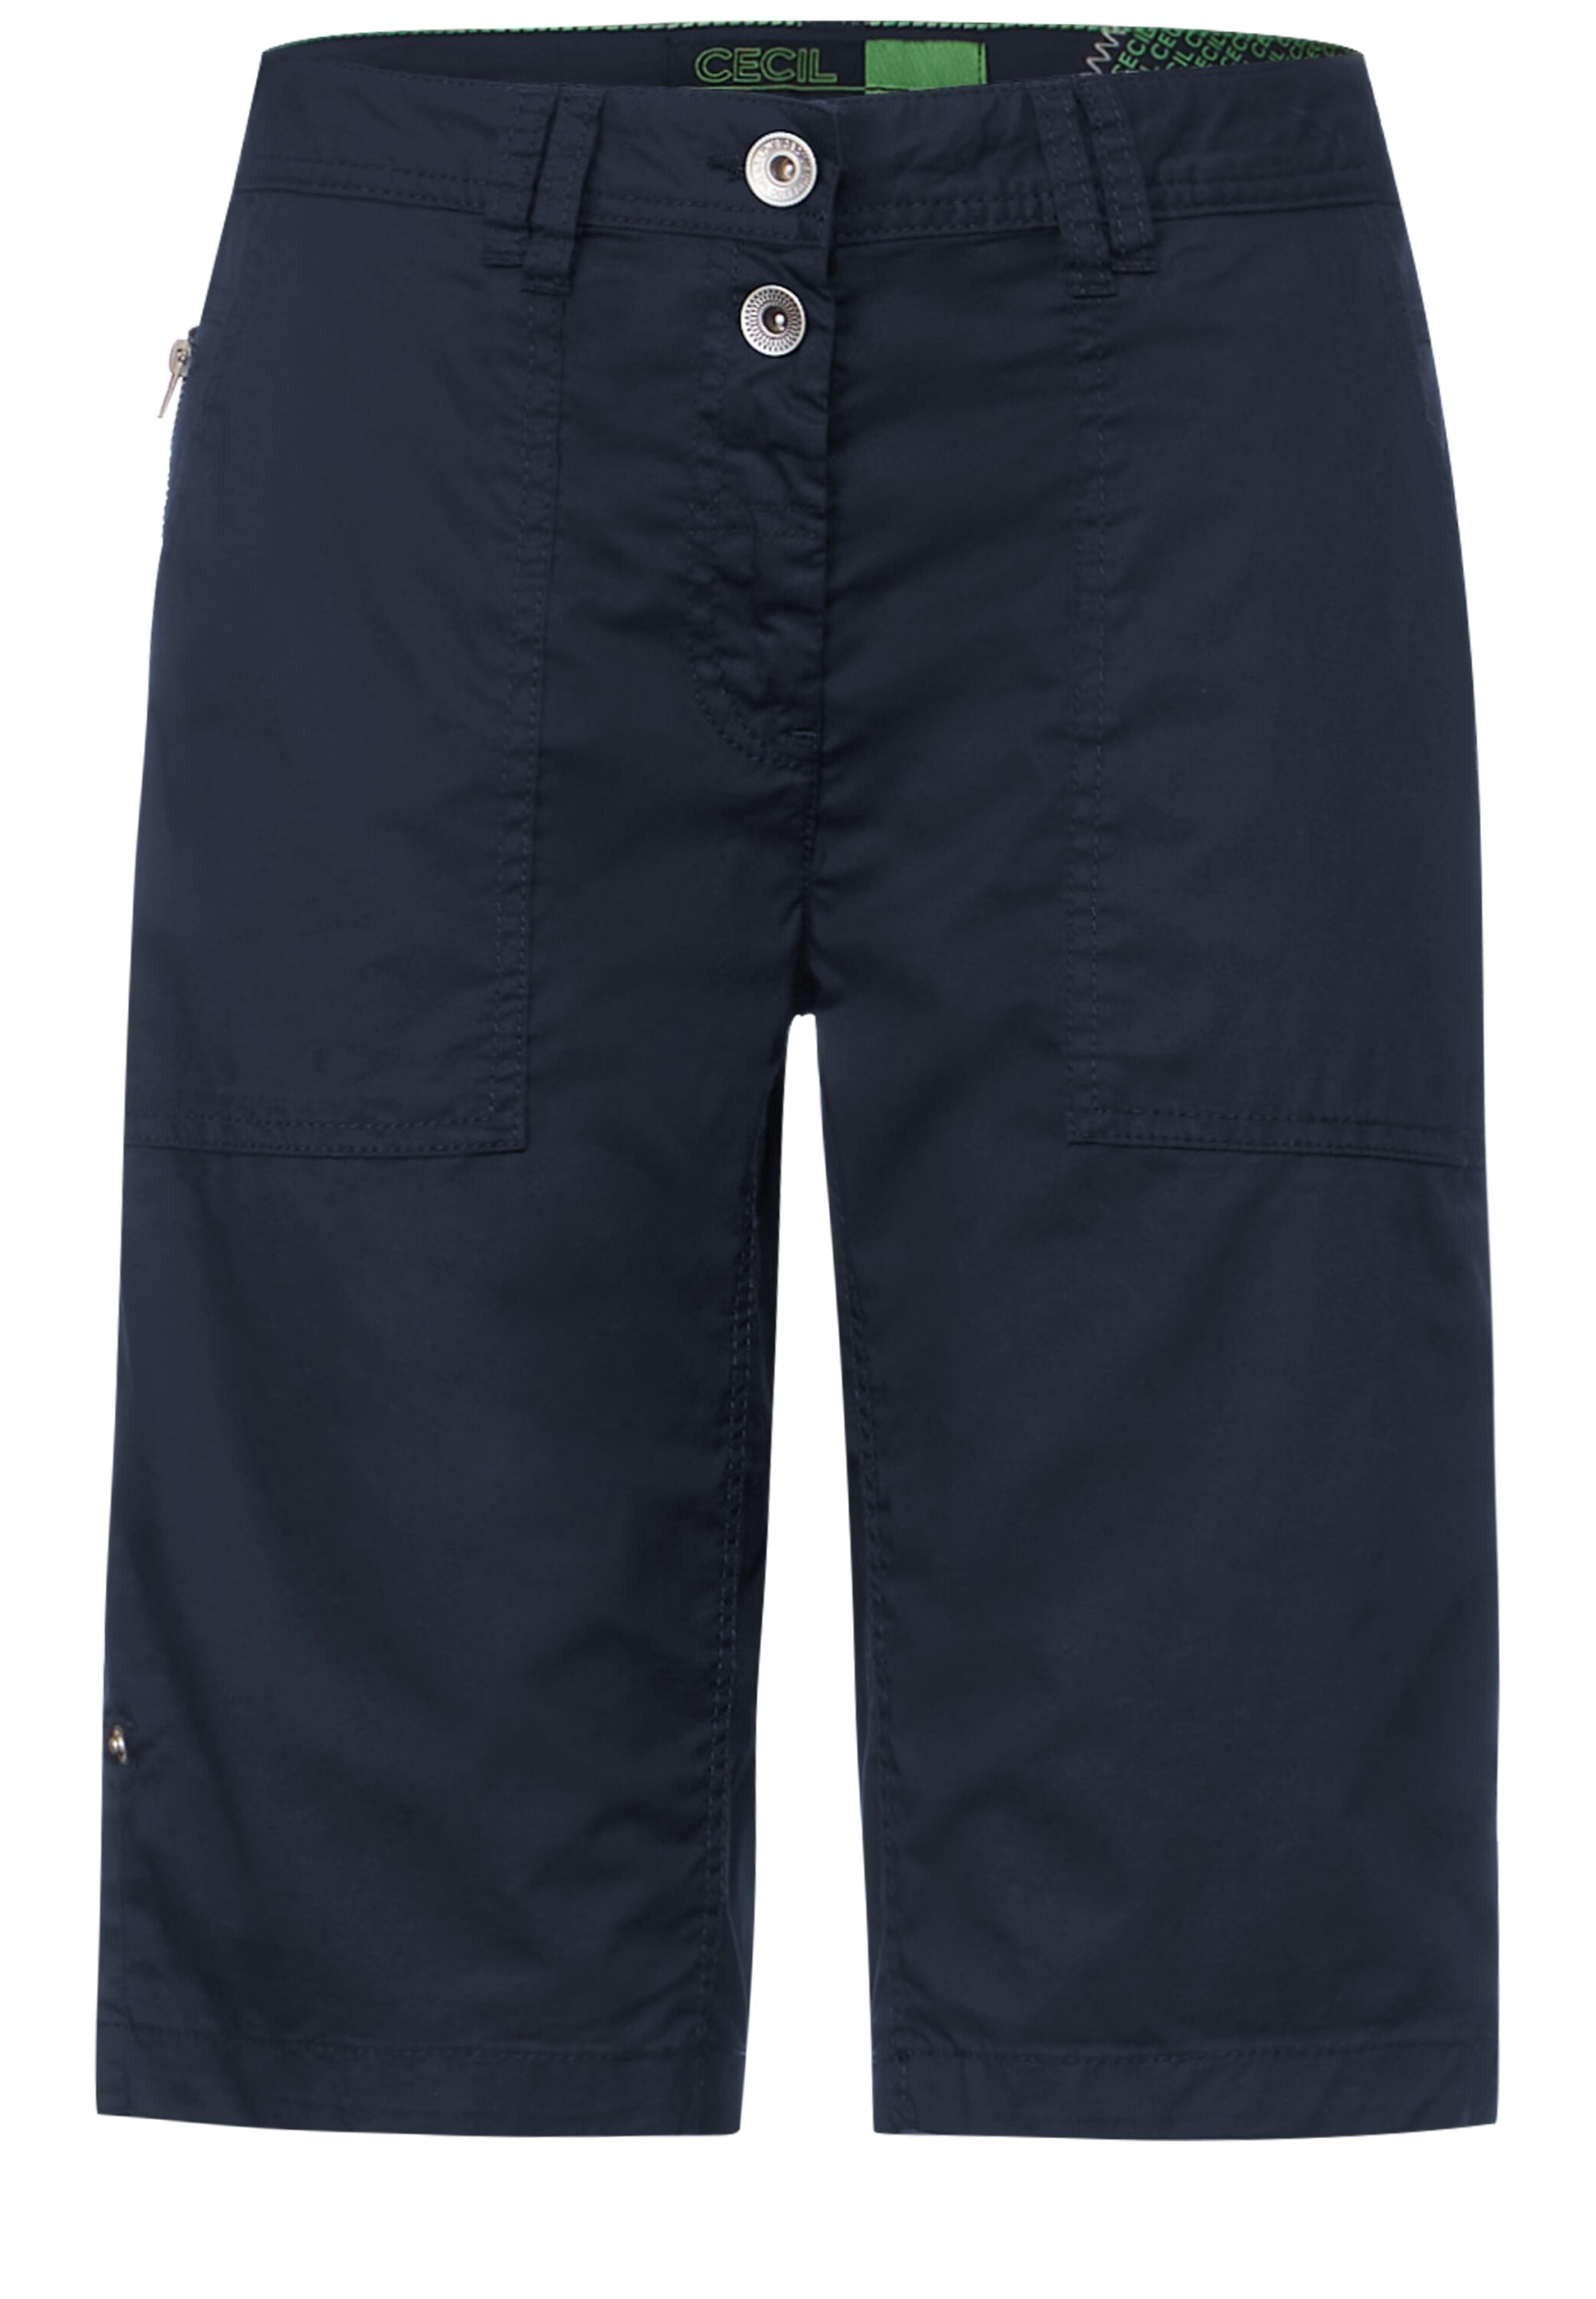 Style NOS New York Shorts | 33 | deep blue | B376478-10128-33